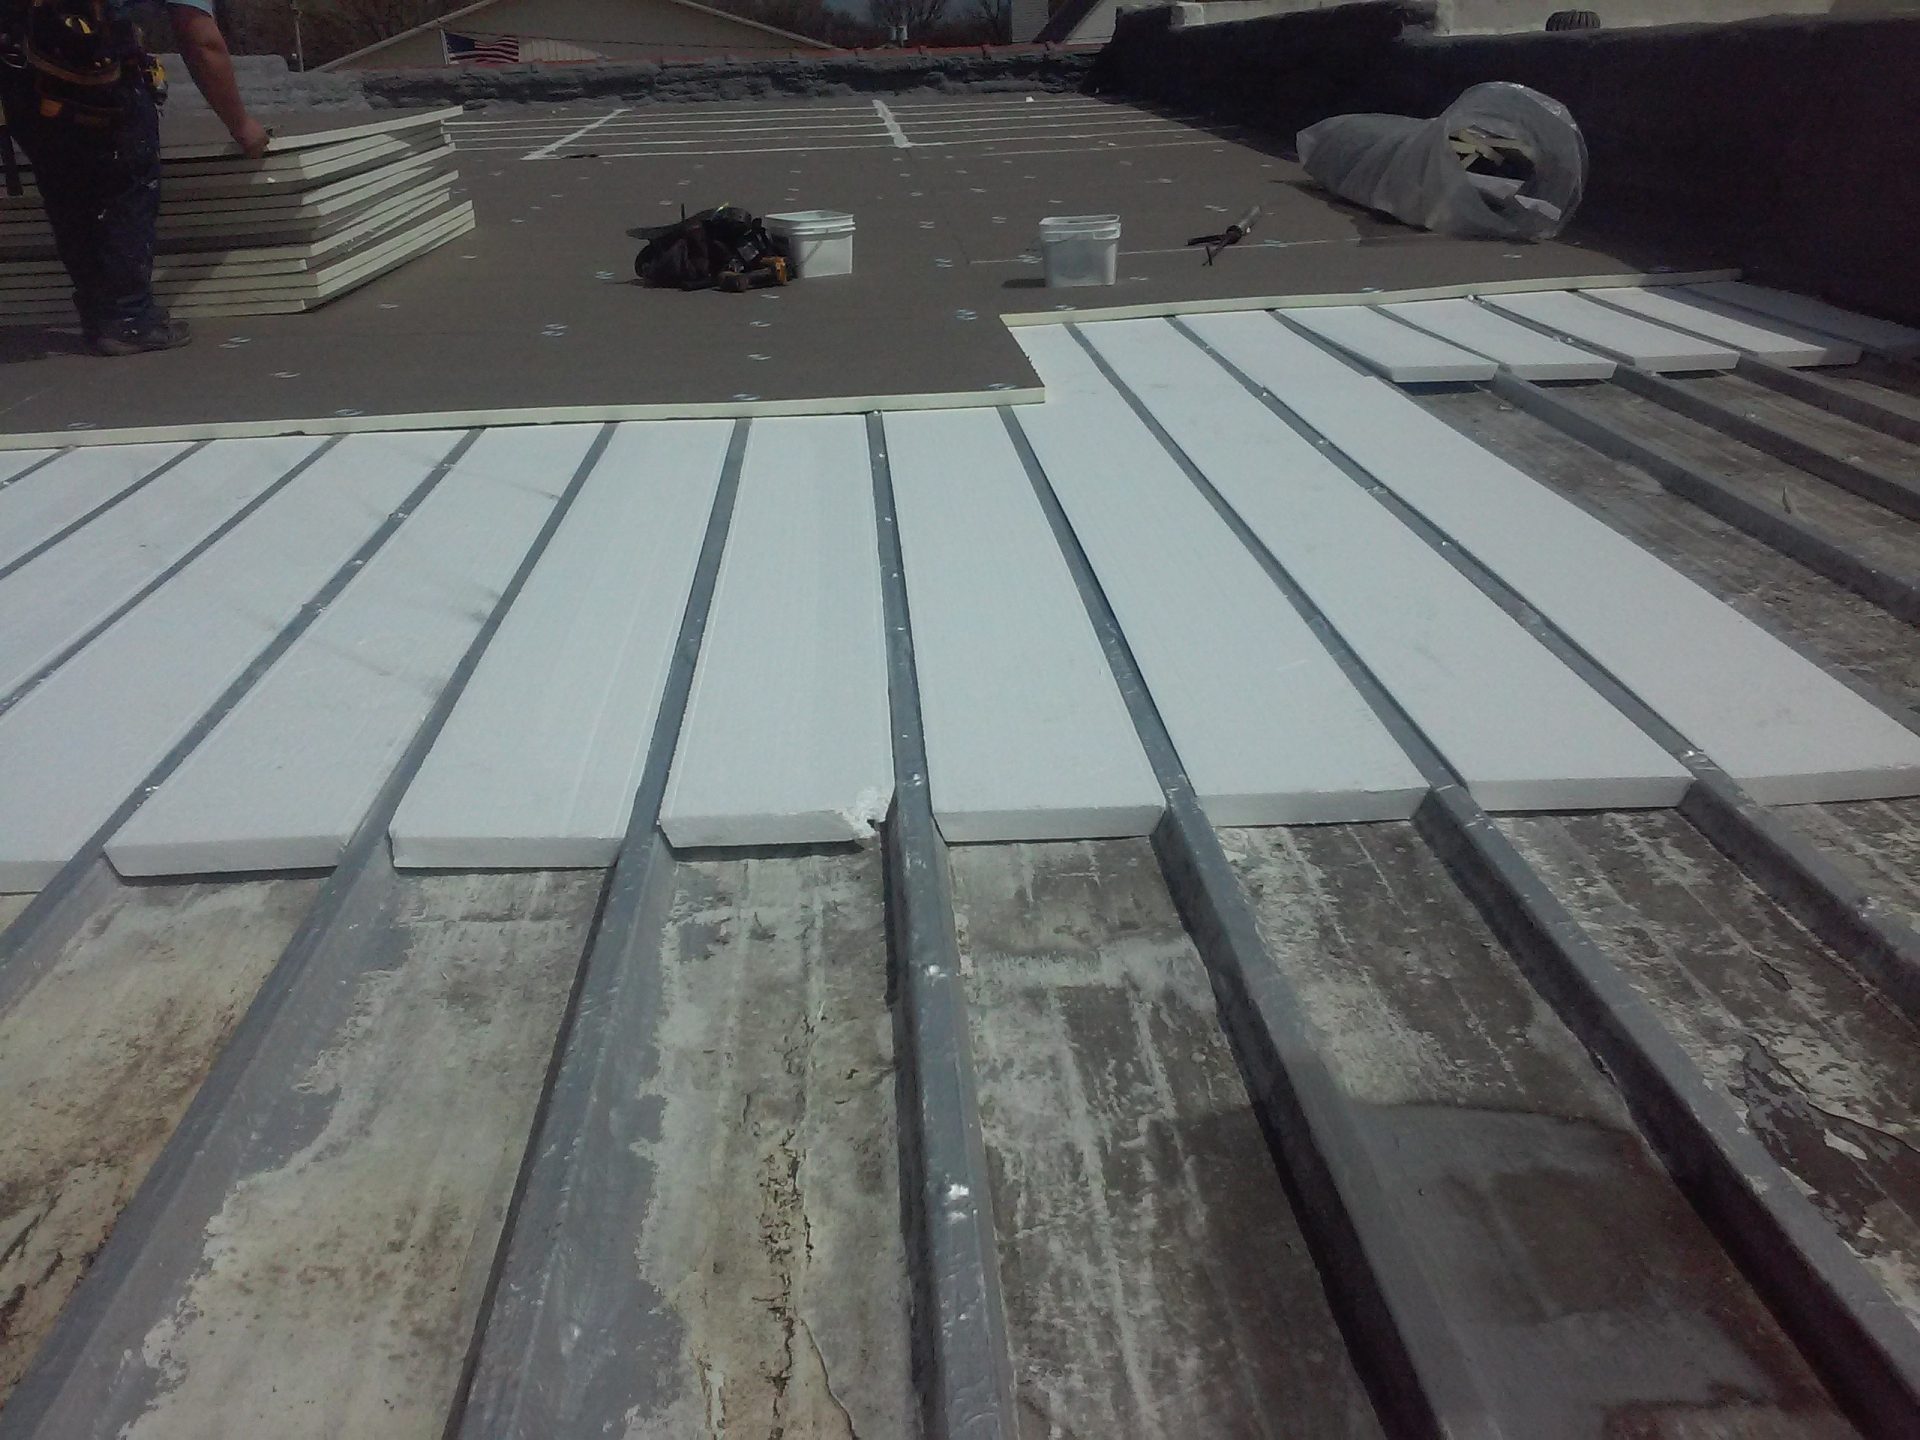 roof restoration in progress